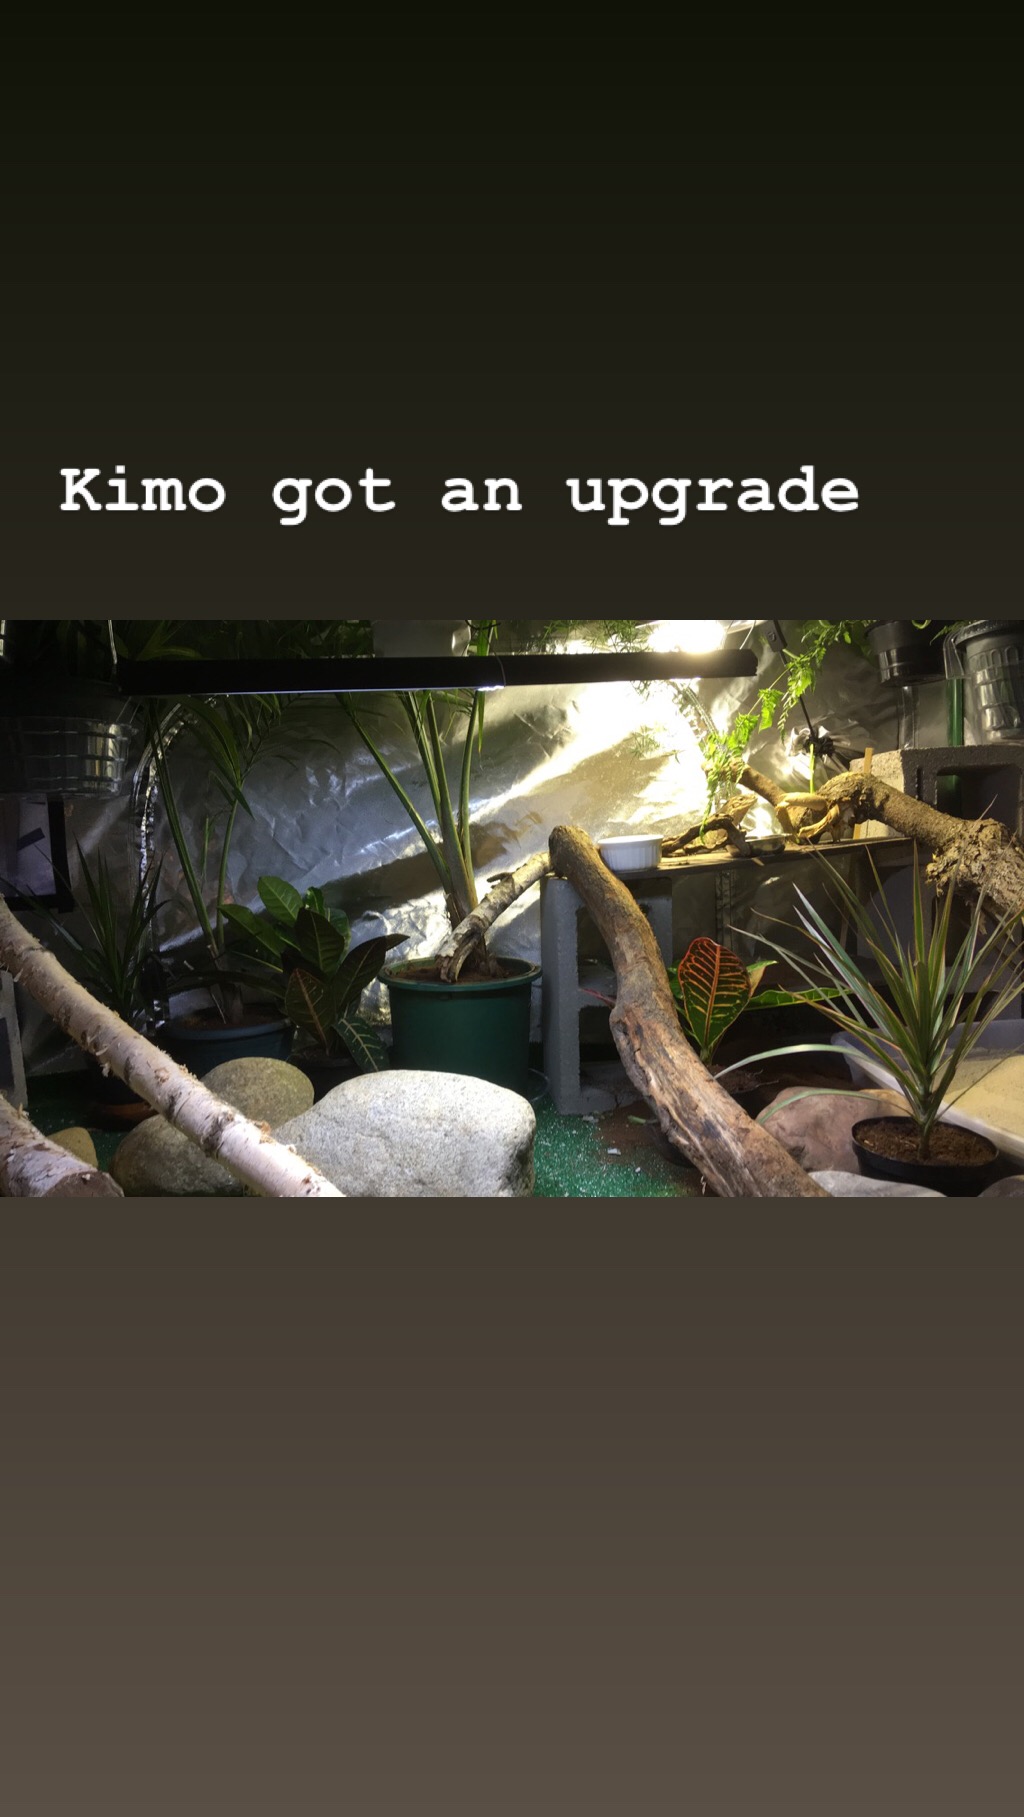 Kimo rhino igana setup